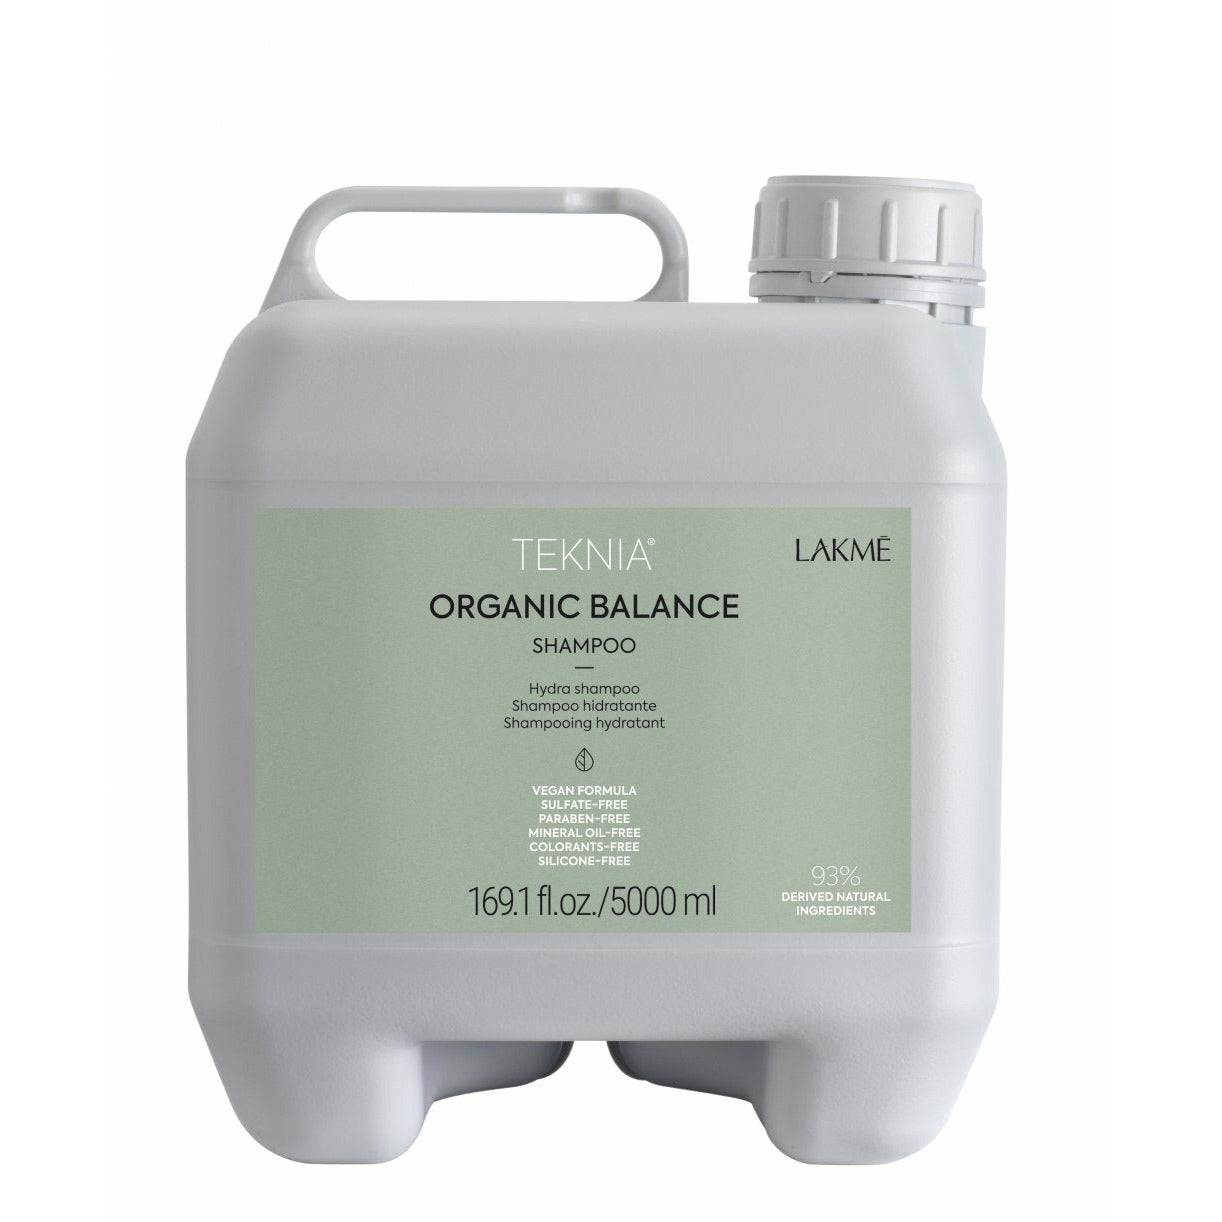 Lakme Teknia Organic Balance Shampoo